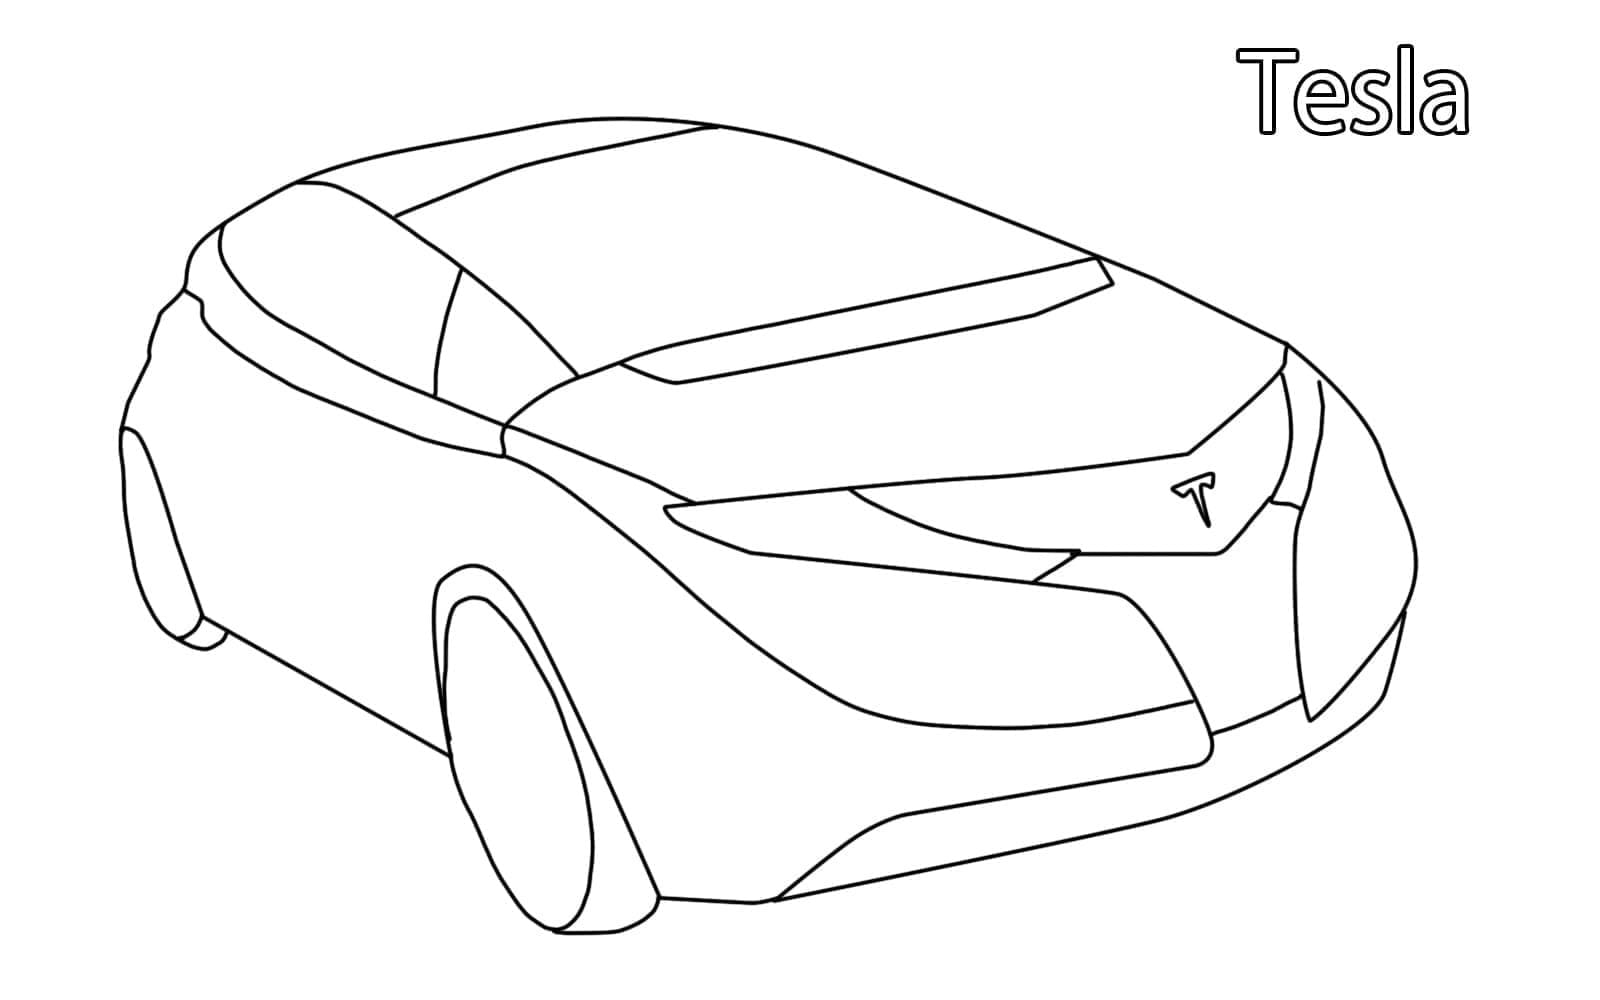 Tesla roadster coloring page